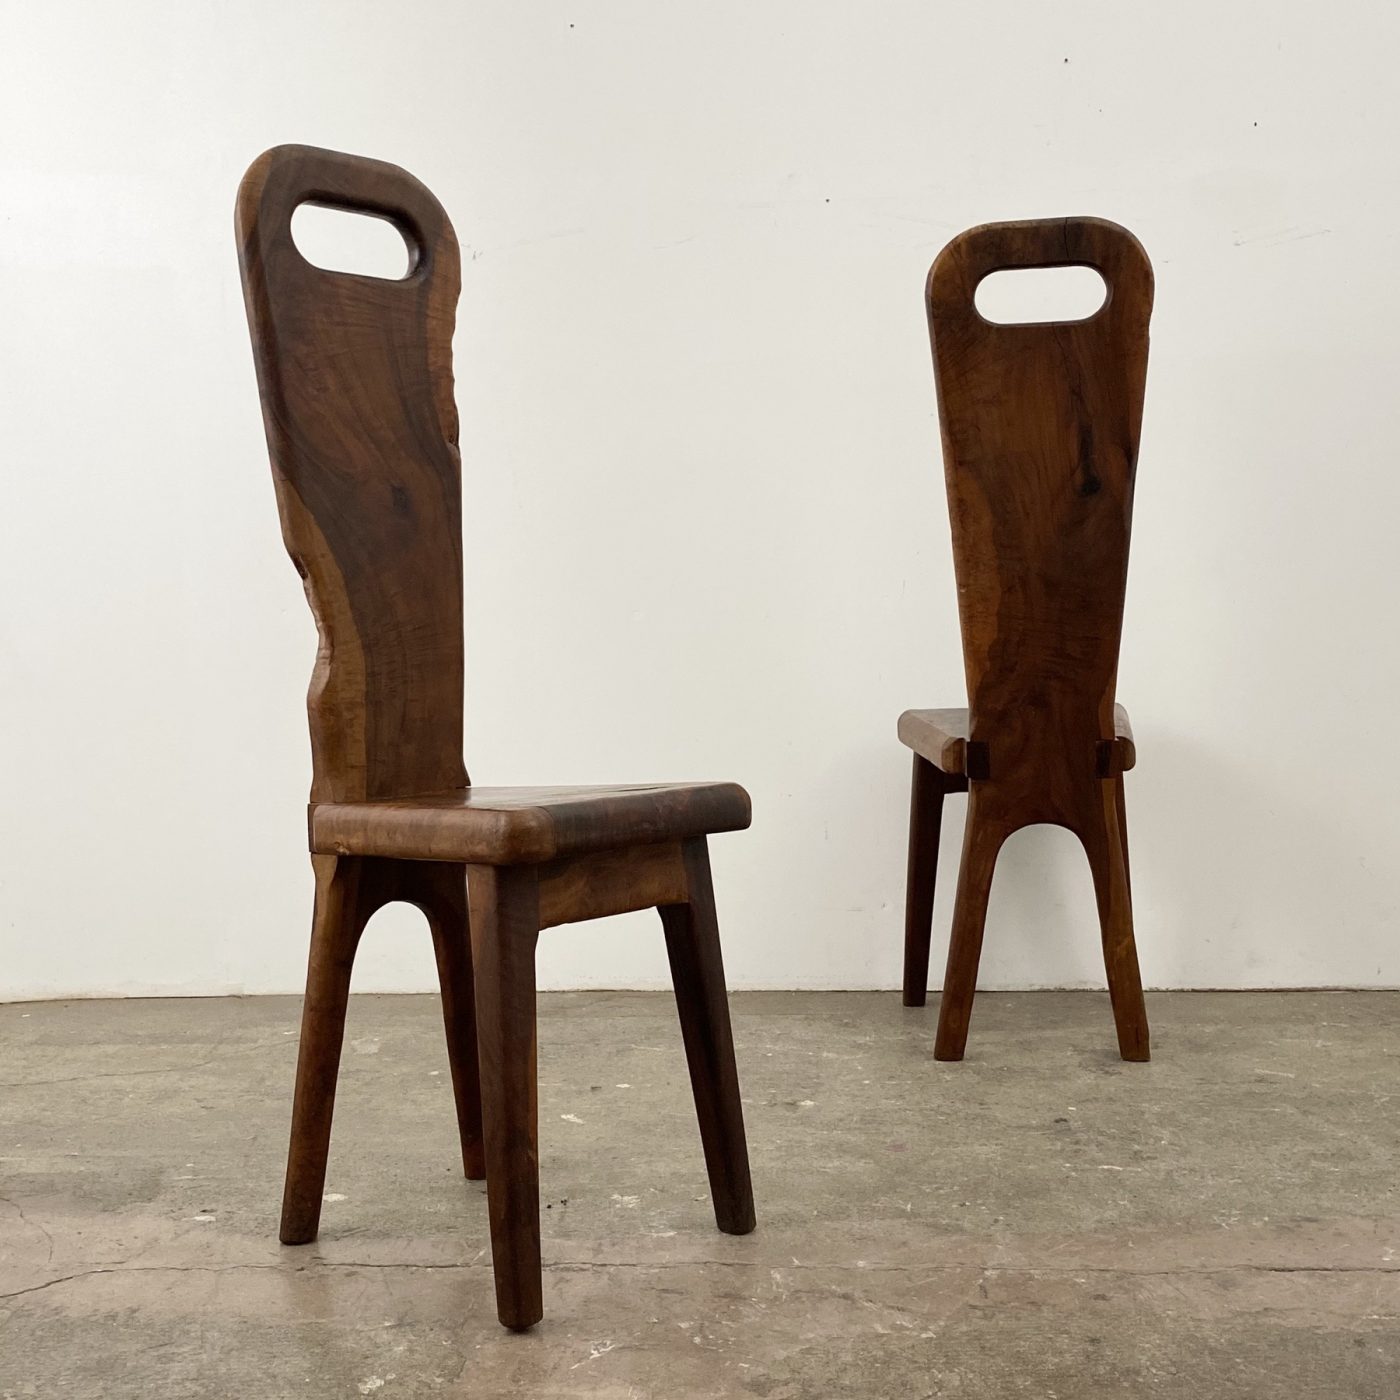 objet-vagabond-olive-chairs0007